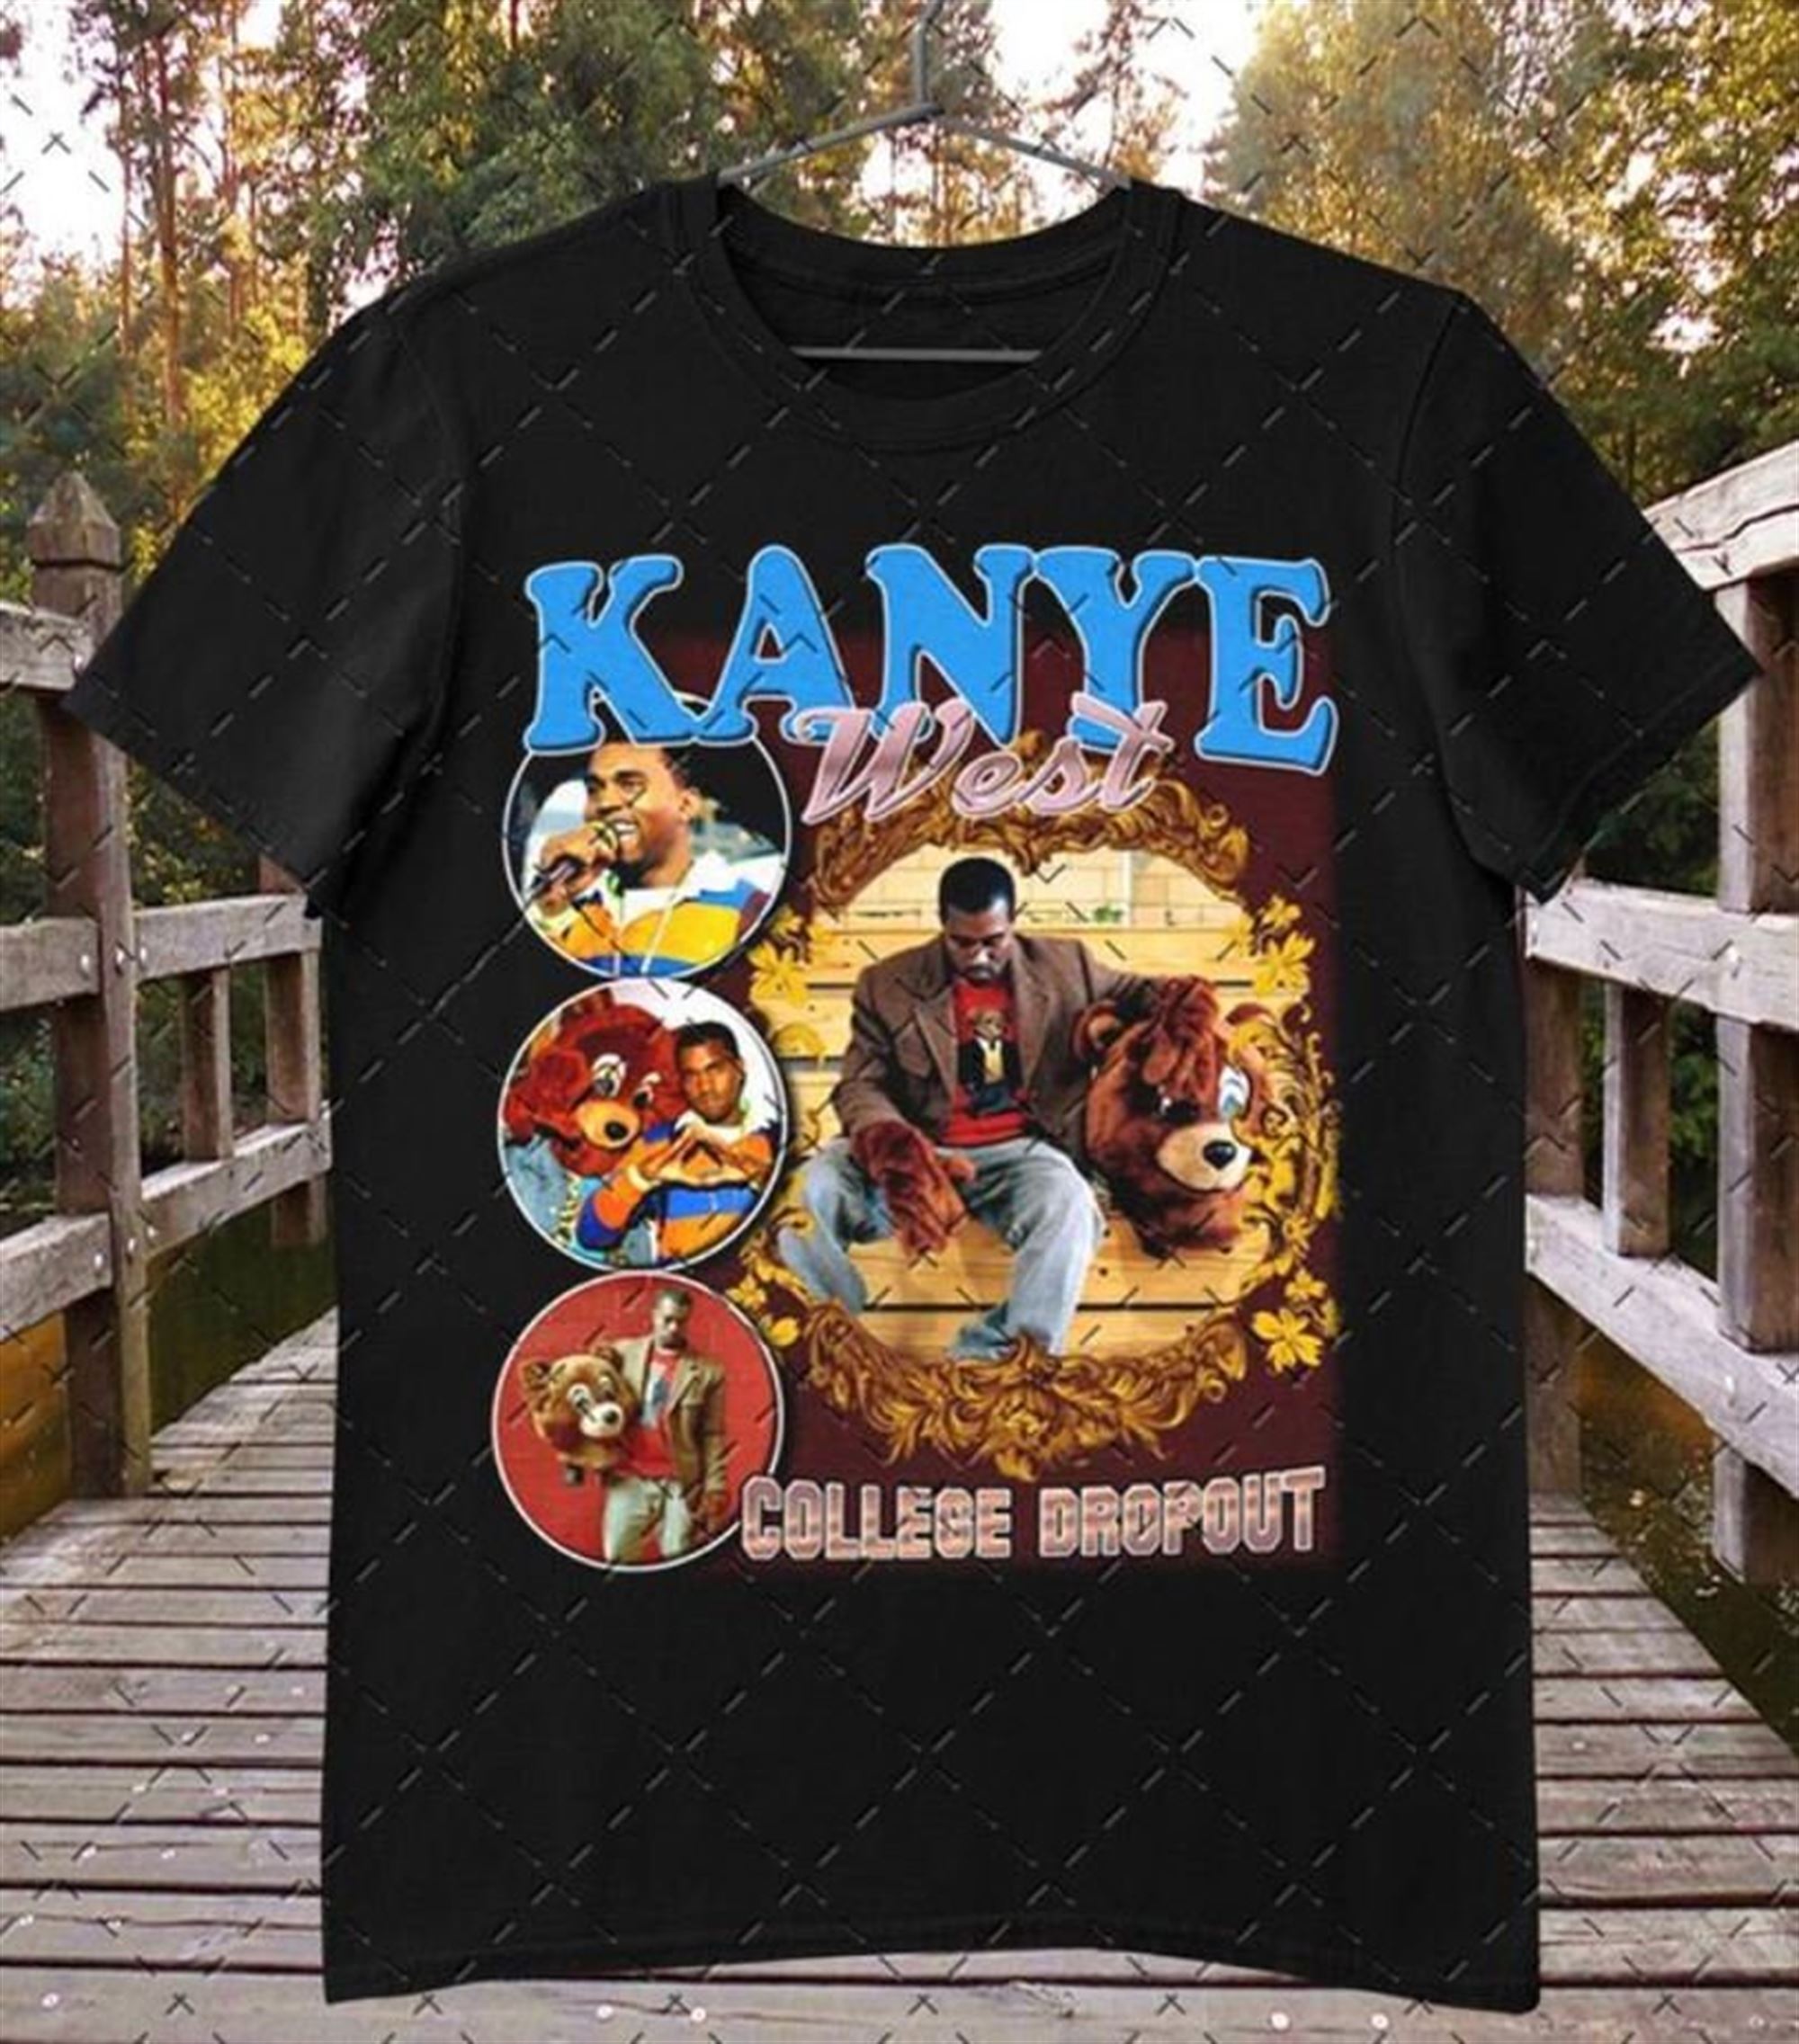 Promotions Kanye West T-shirt Kanye West College Dropout Vintage Inspired 90's Rap Unisex T Shirt Long Sleeves Kanye West Sweatshirt Hoodie 